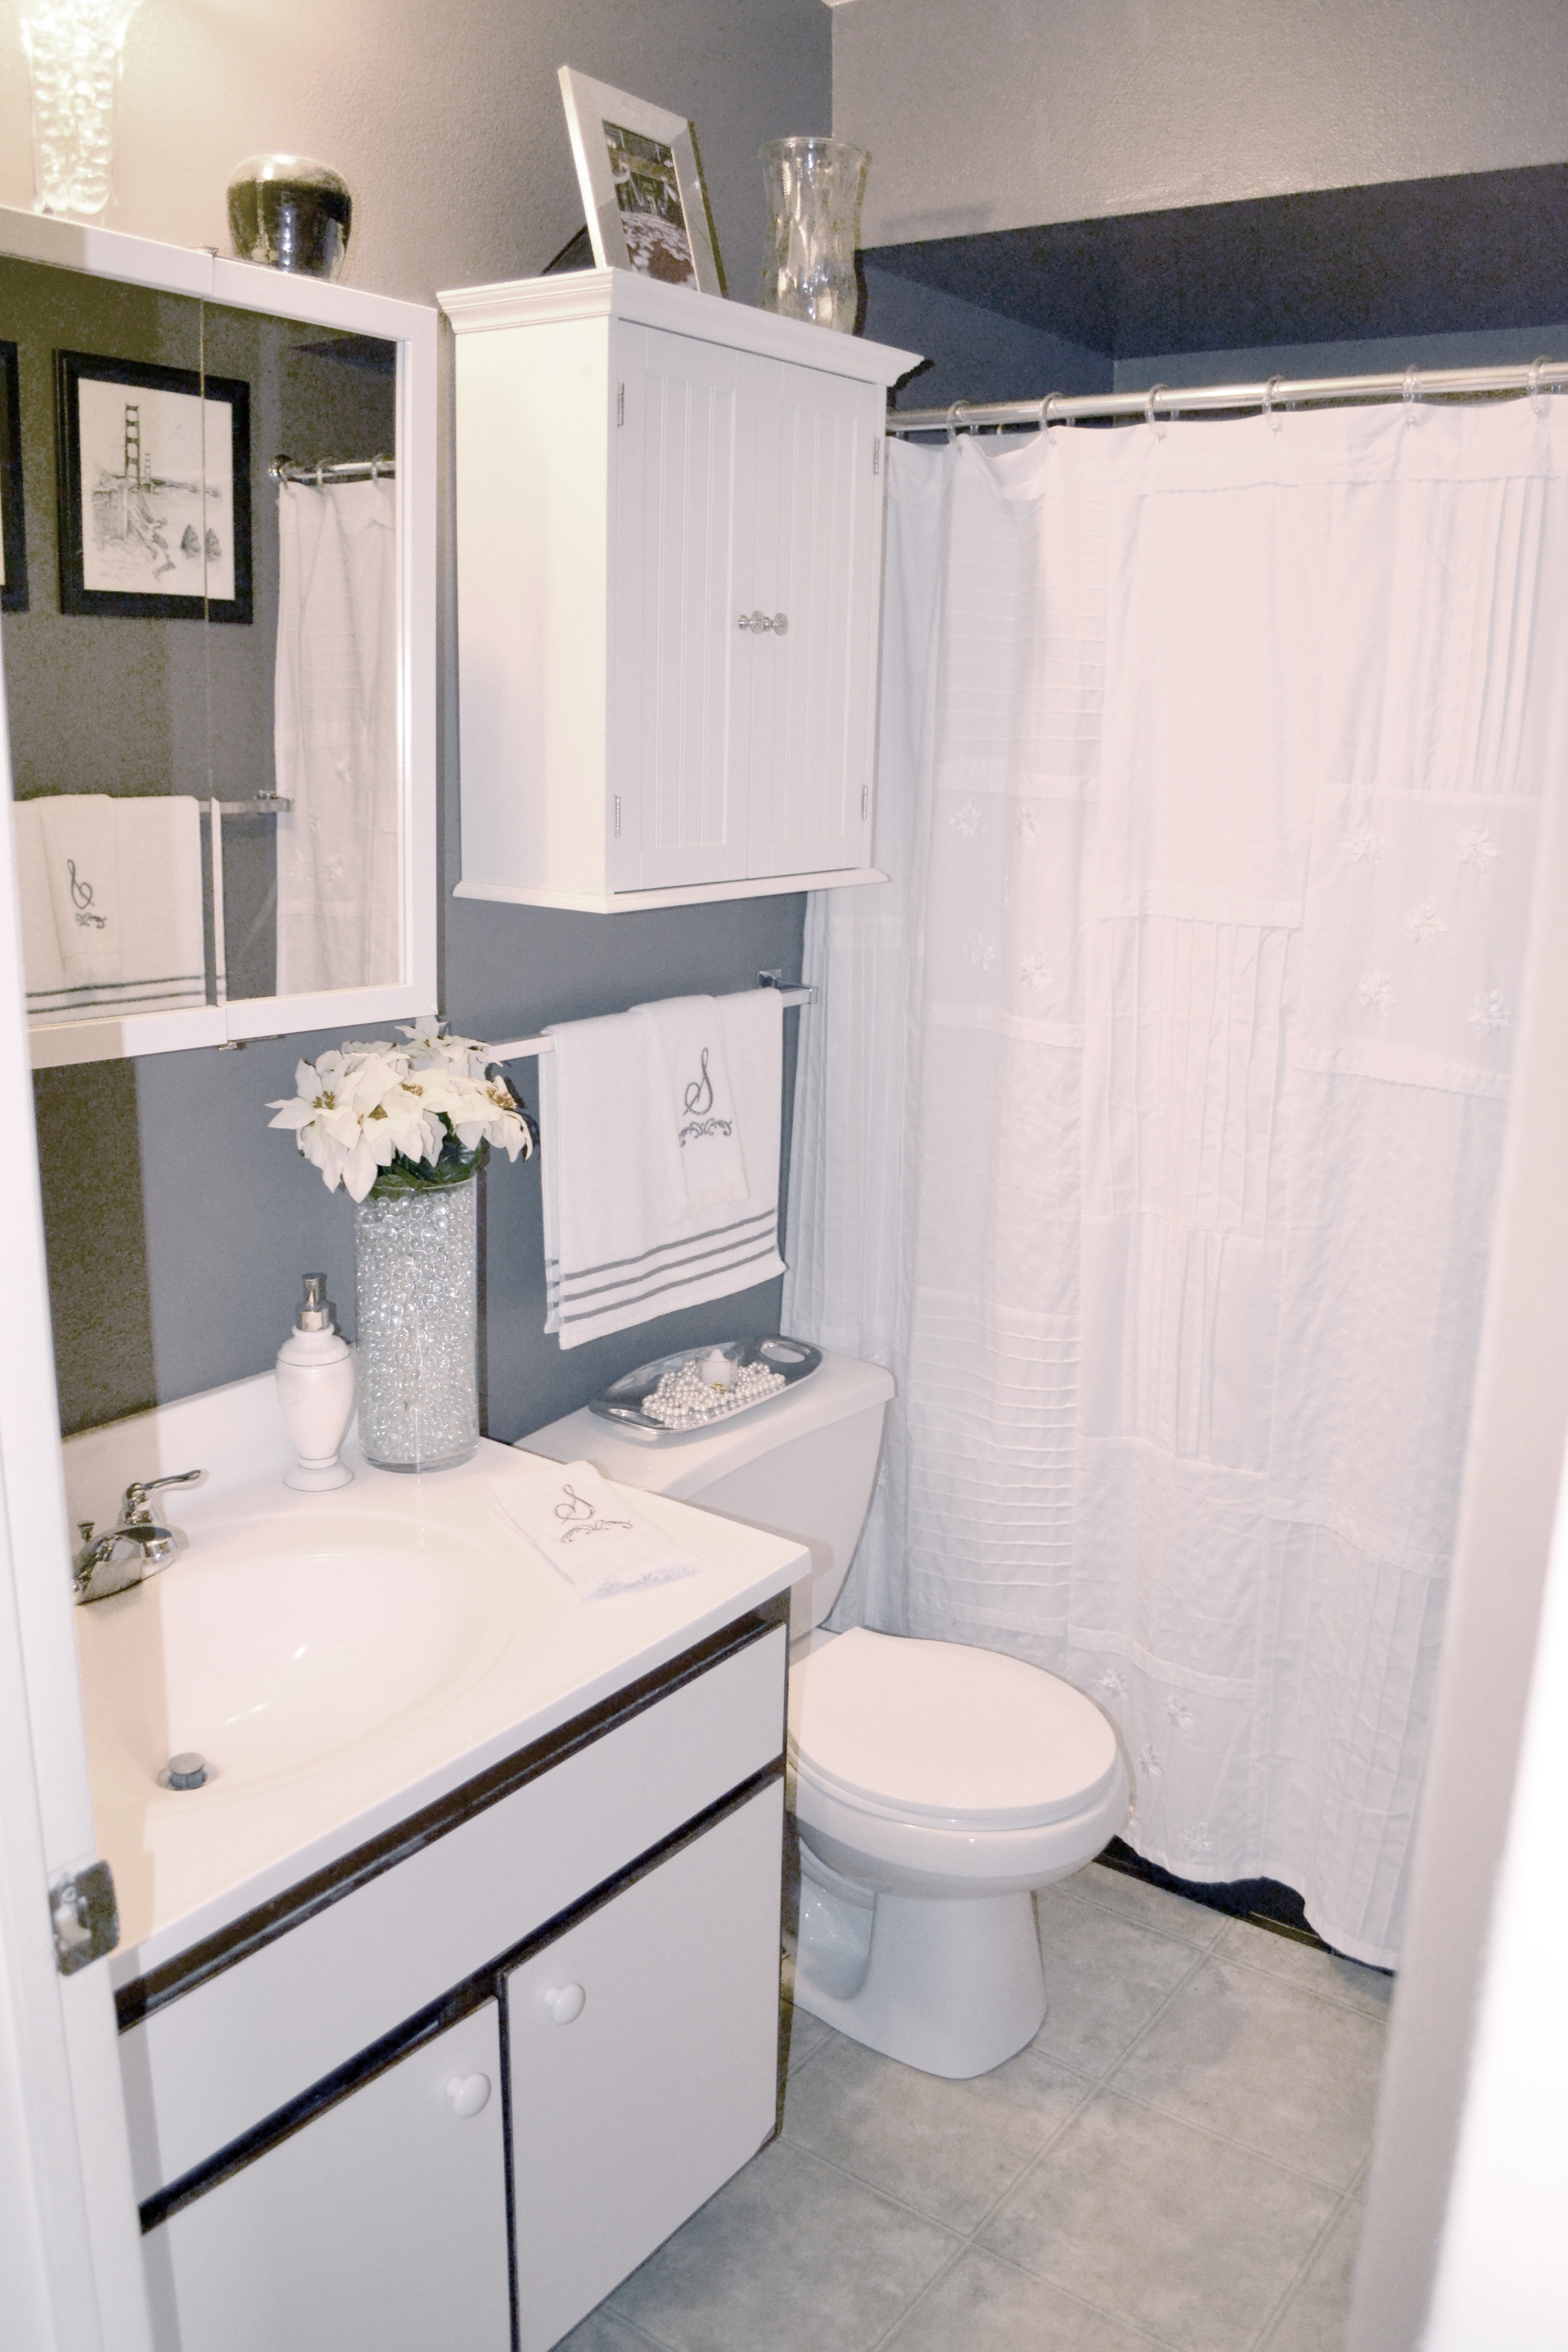 Two bedroom JNCO bathroom | apartment rentals watertown ny